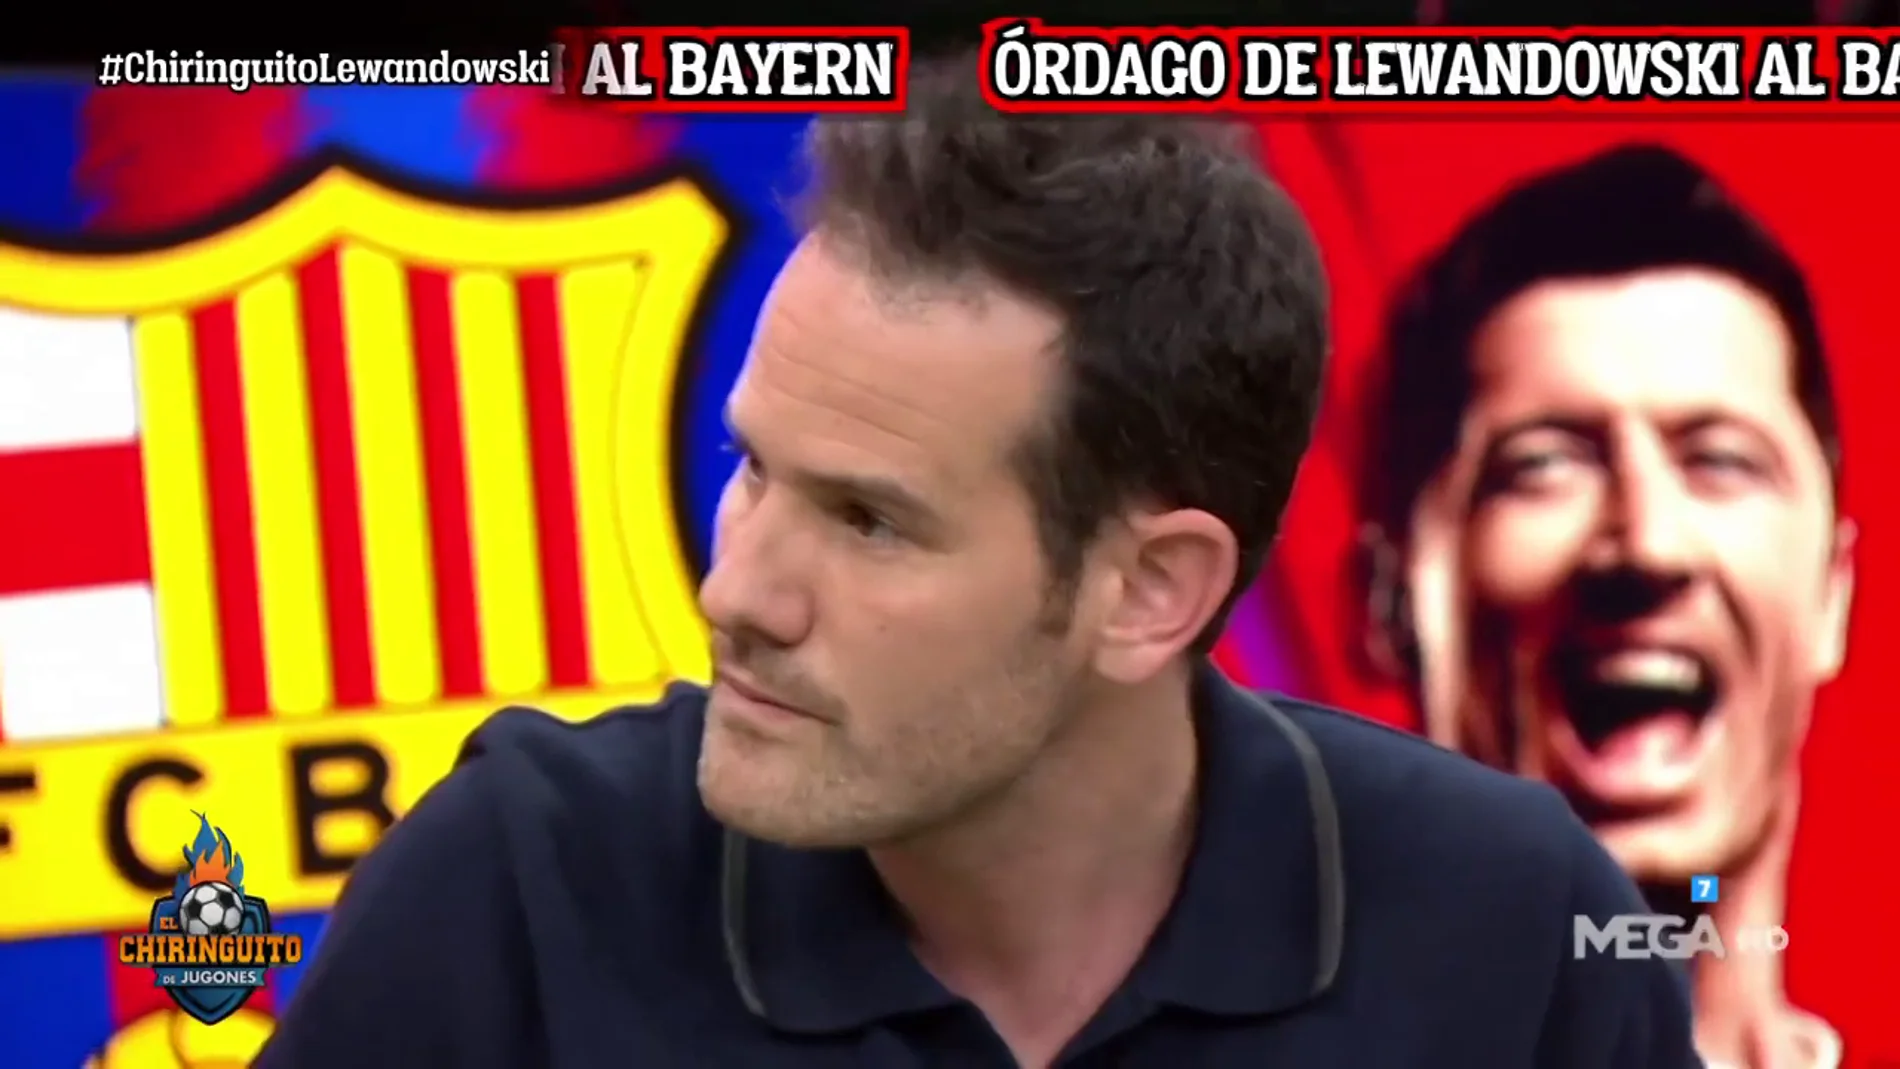 Quim Doménech: "El Barça le ha pedido a Lewandowski que se 'mojase' públicamente".